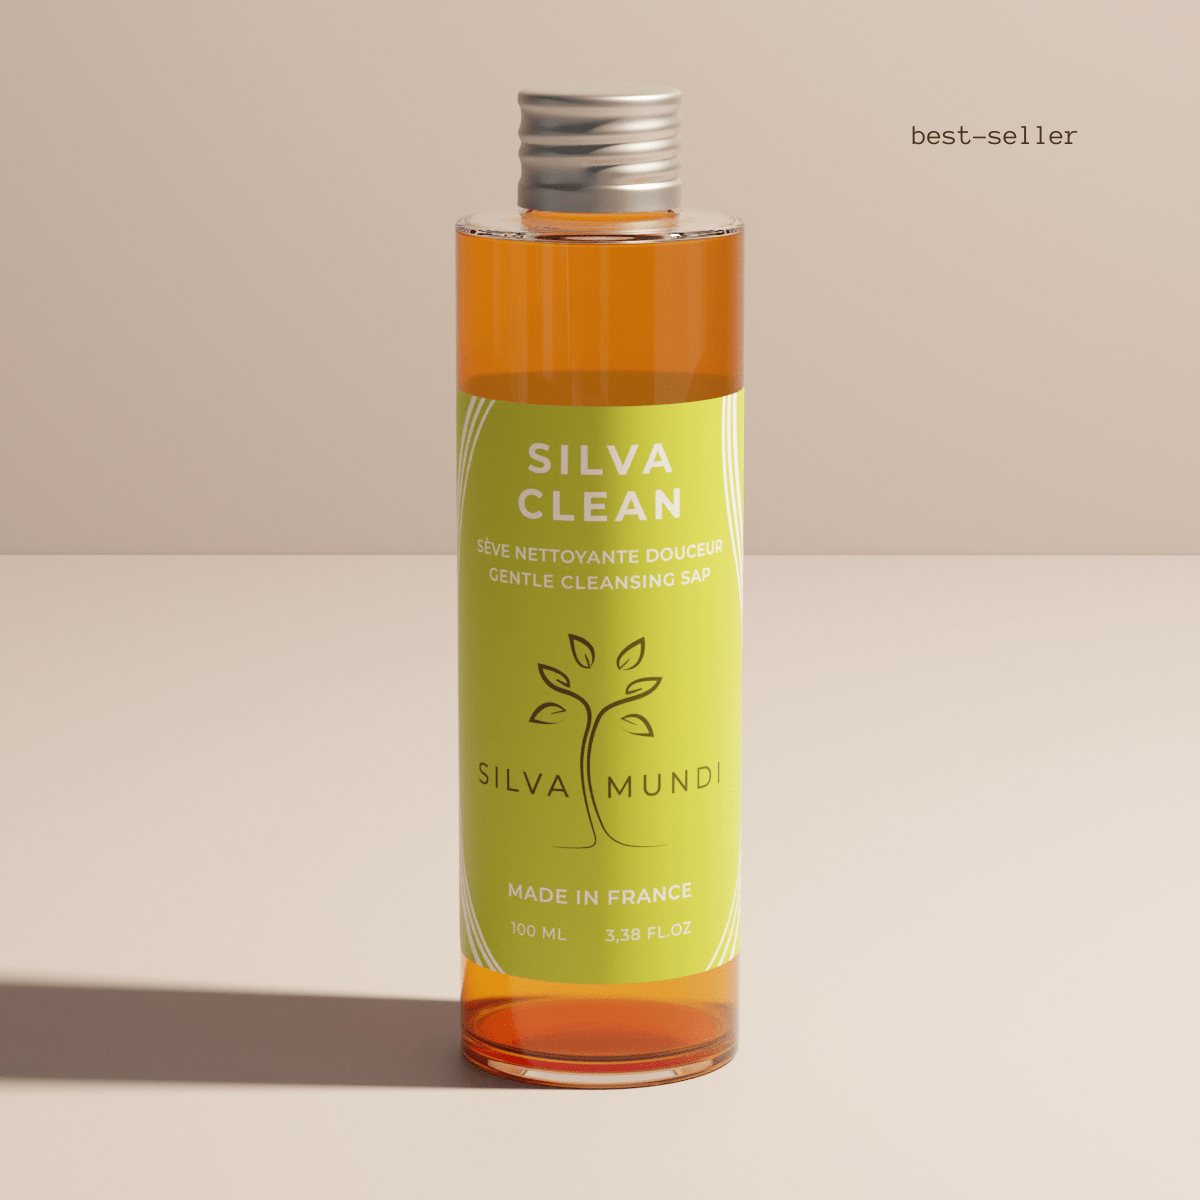 Silva Clean - Silva Mundi